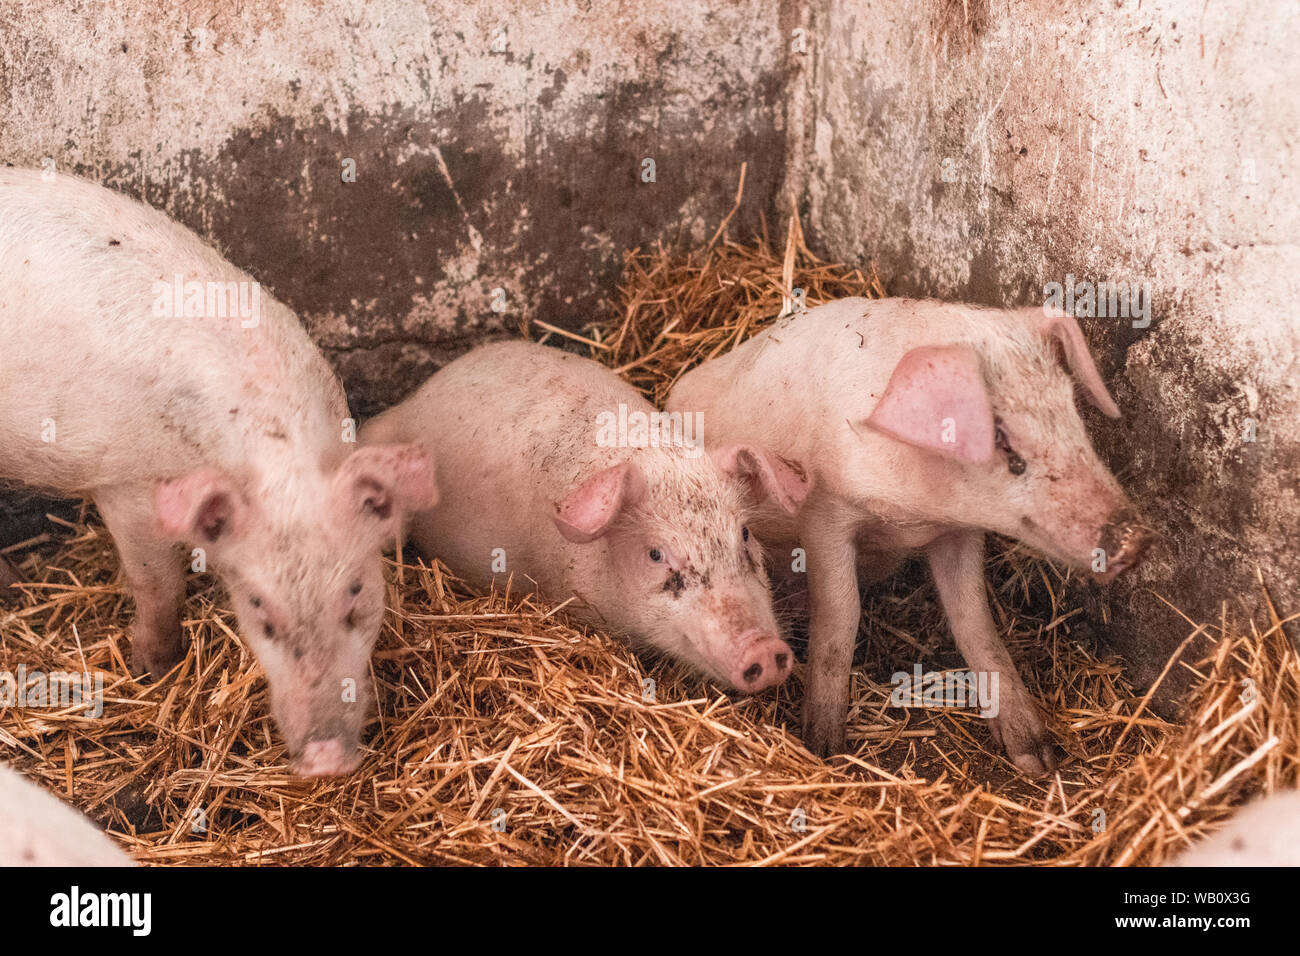 Pig breeding, livestock raising Stock Photo